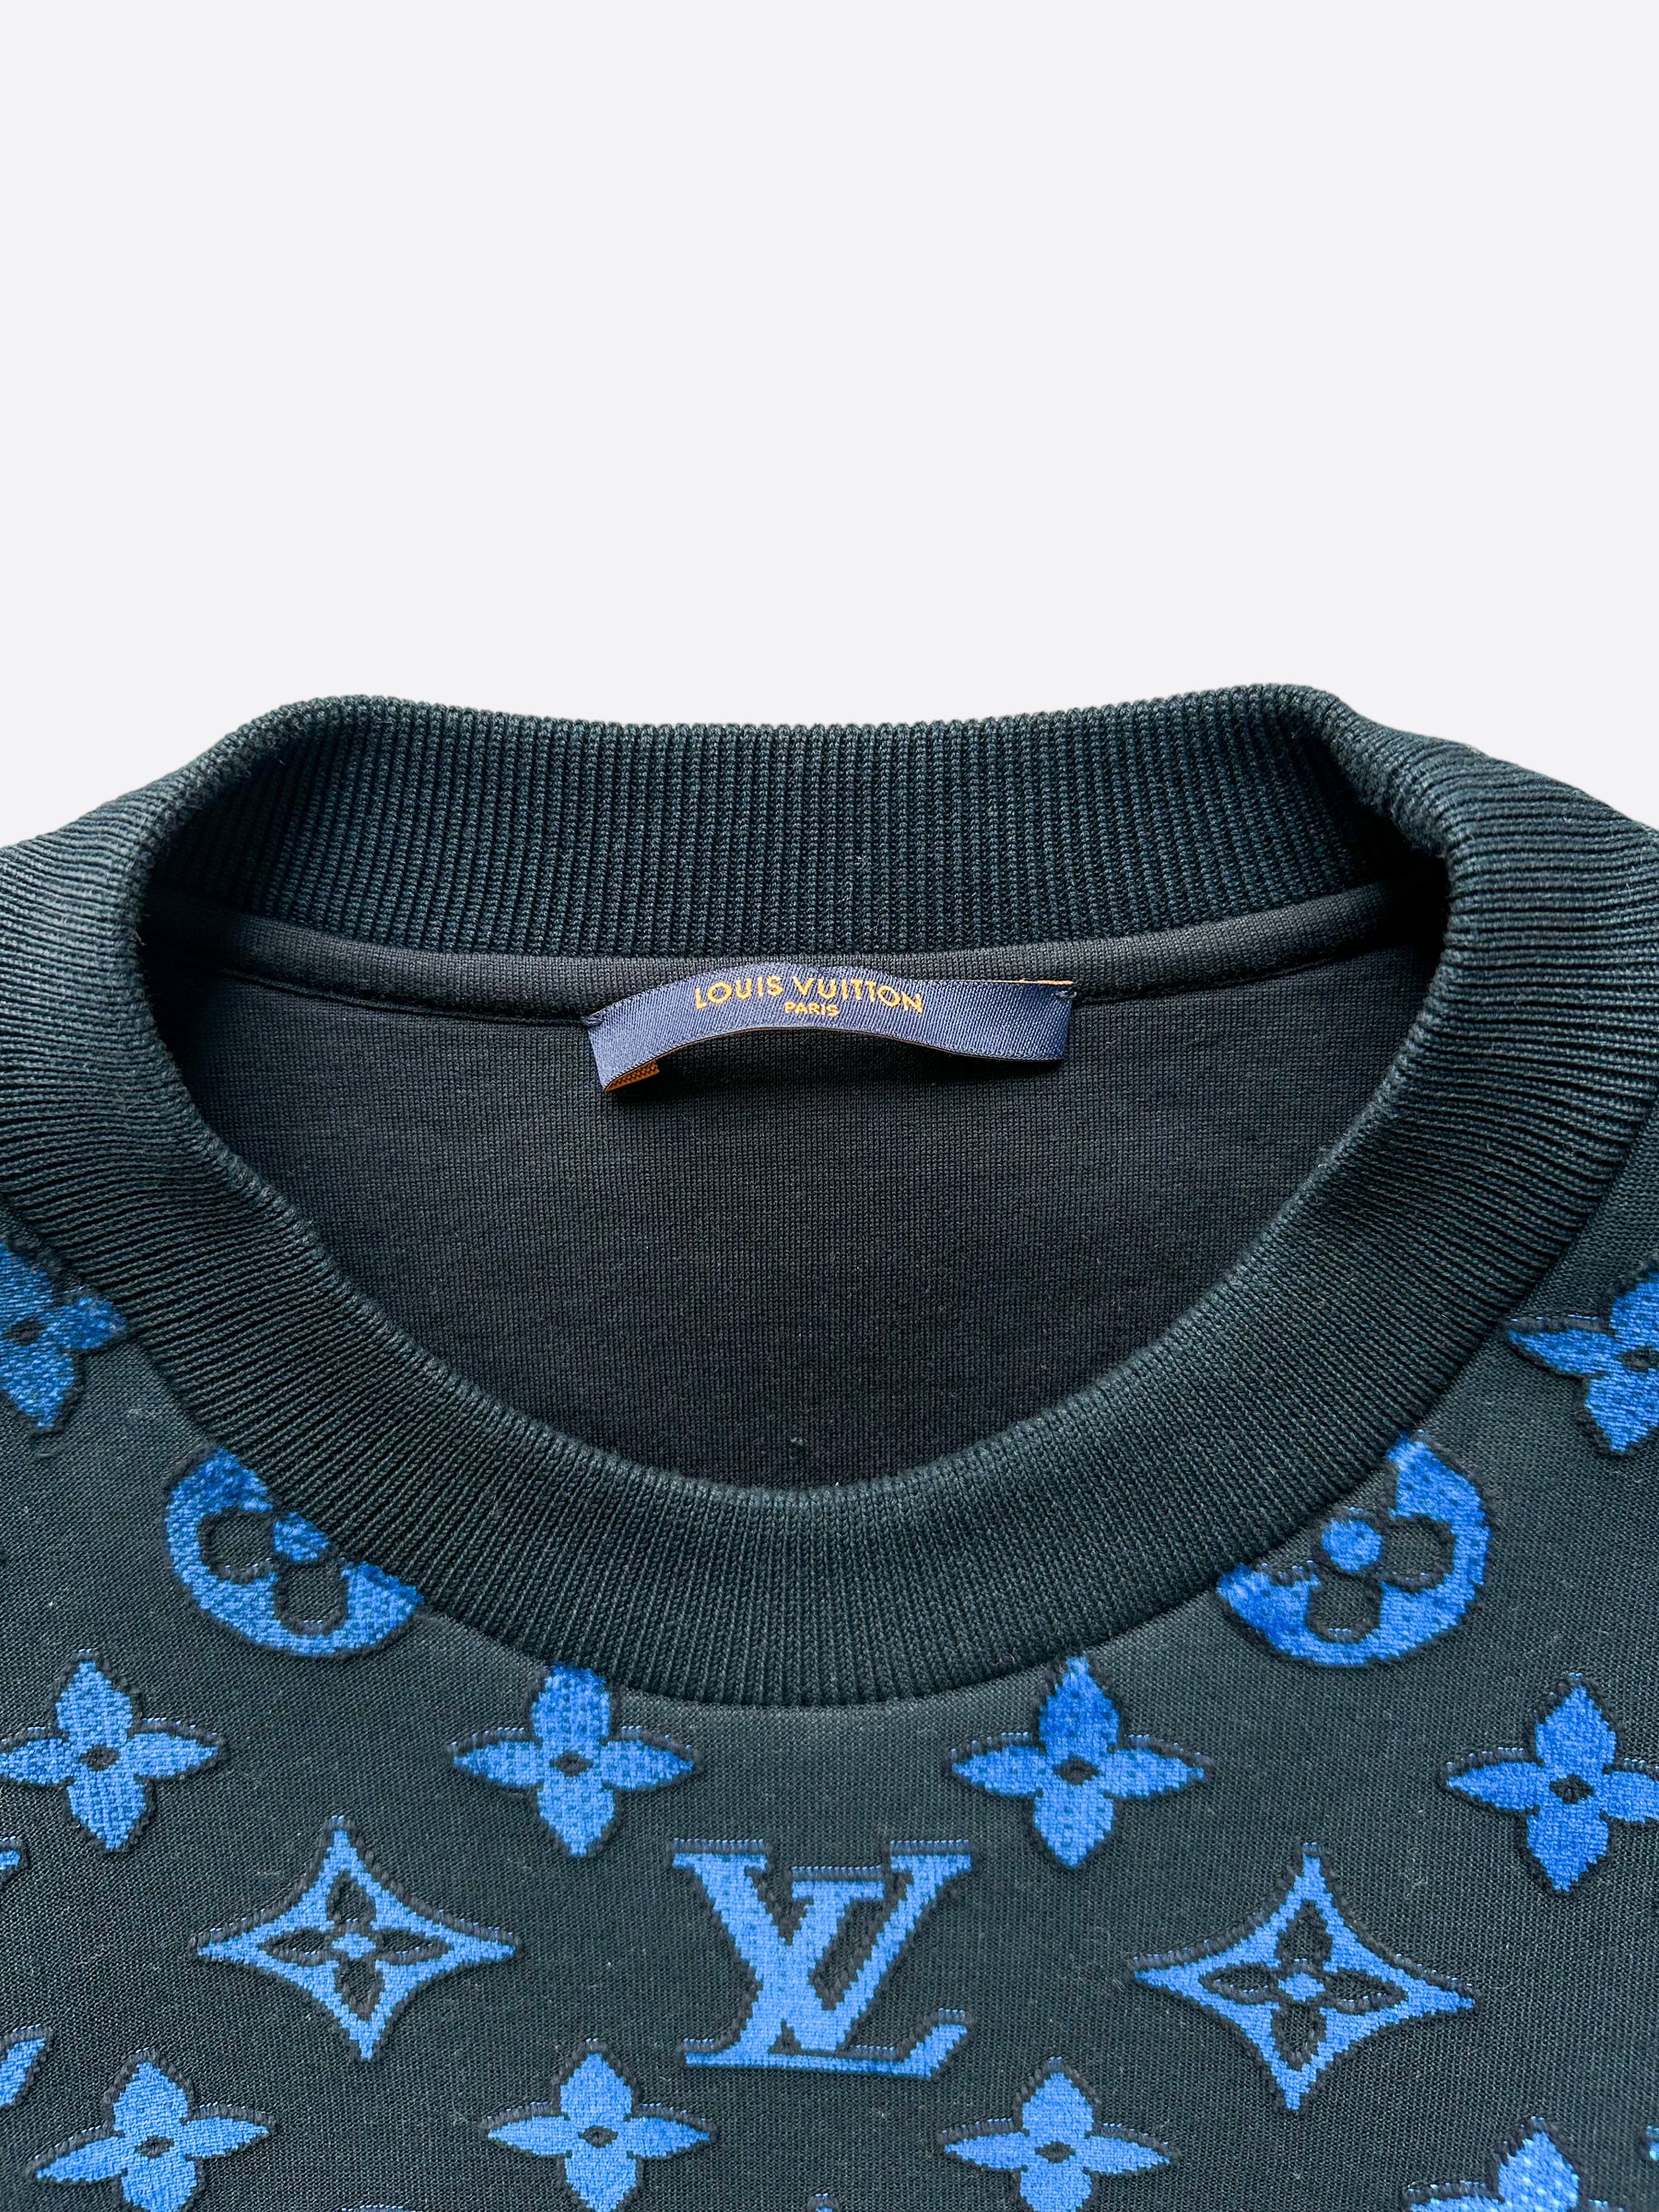 vuitton blue sweatshirt